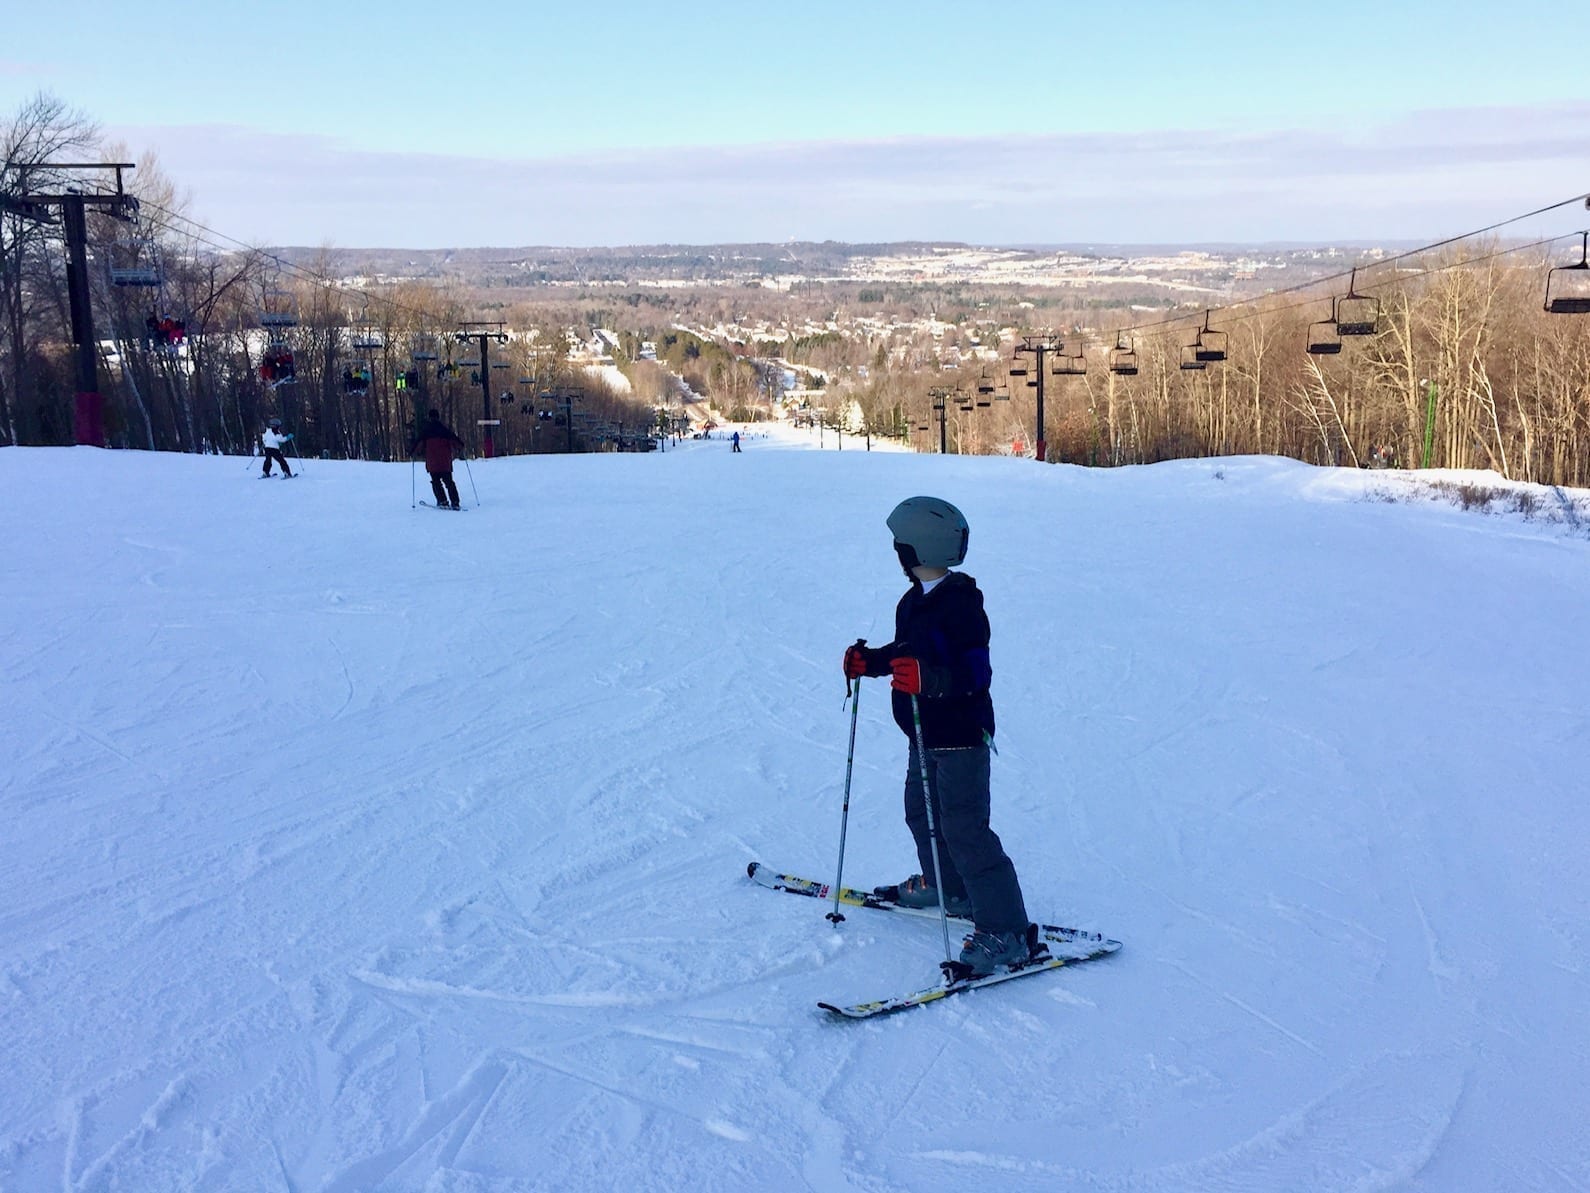 Plan a ski trip - ski lift ticket tips